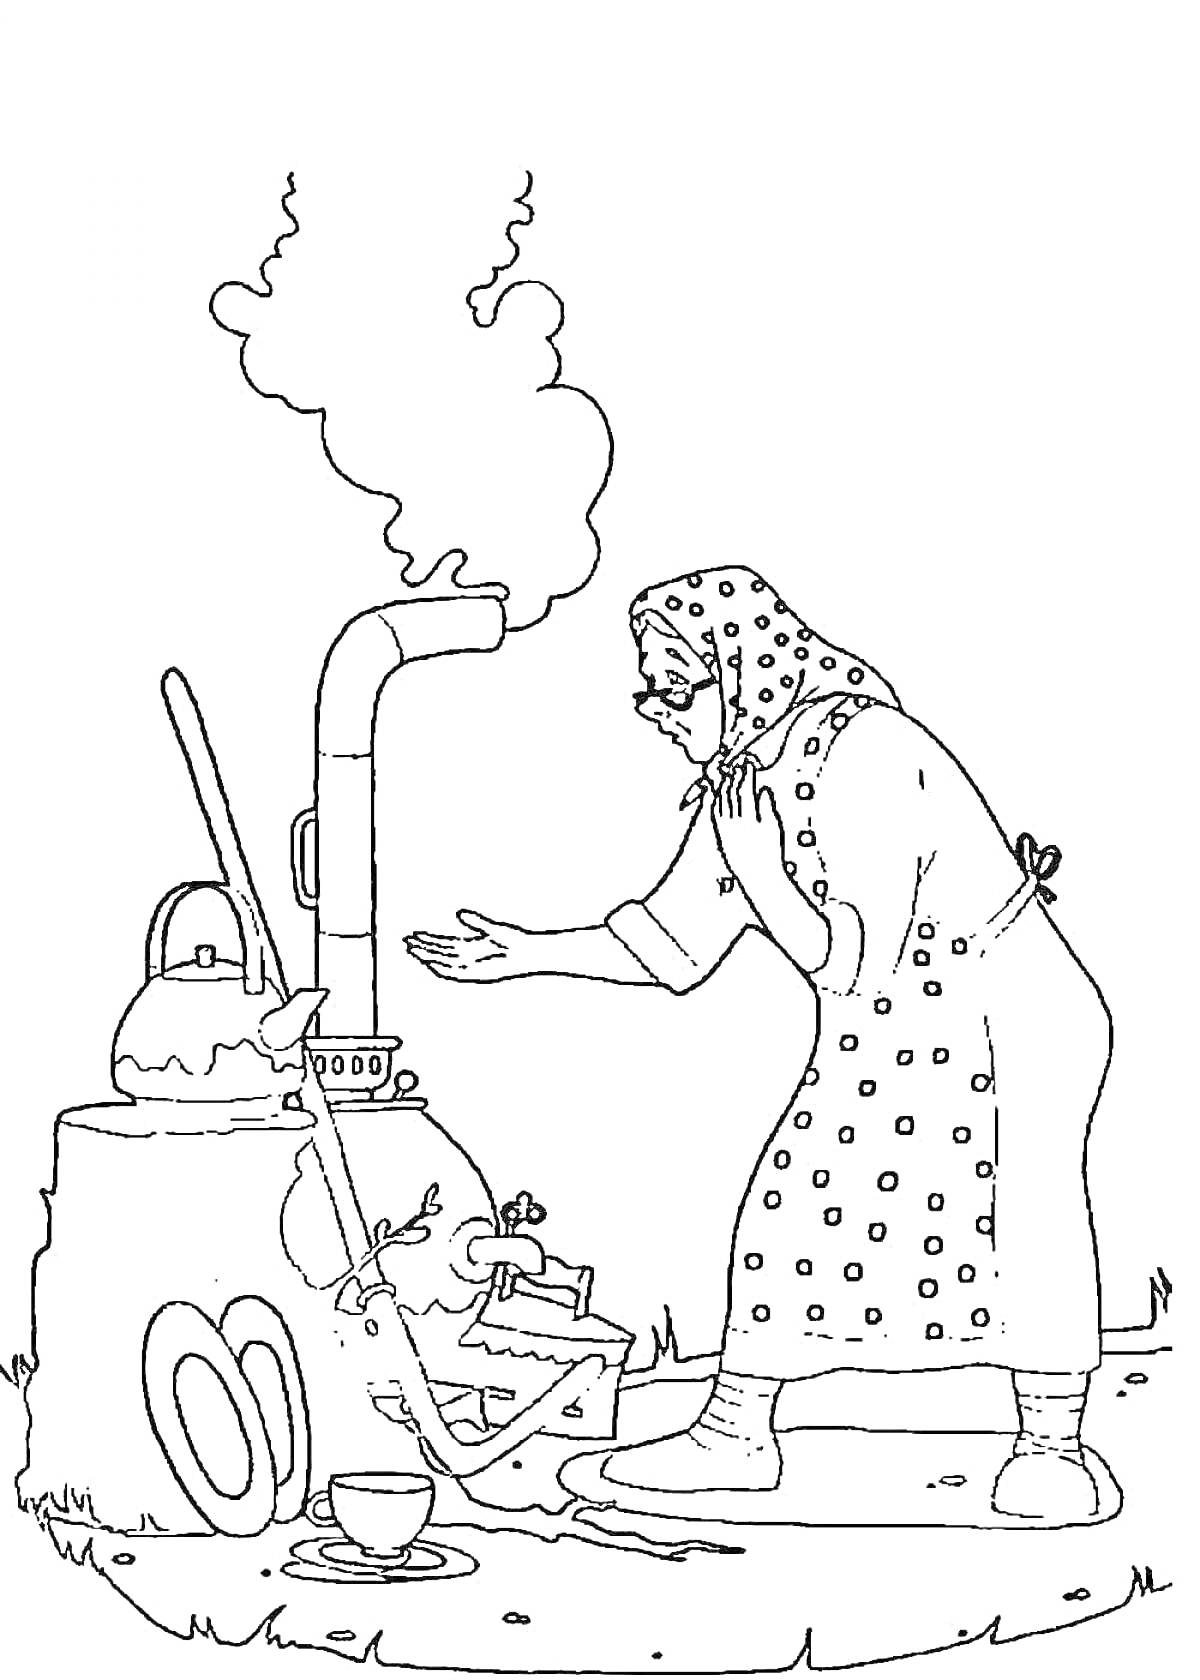 Раскраска Старушка в платке у печи с дымоходом, чайник, плошка и чашка на траве